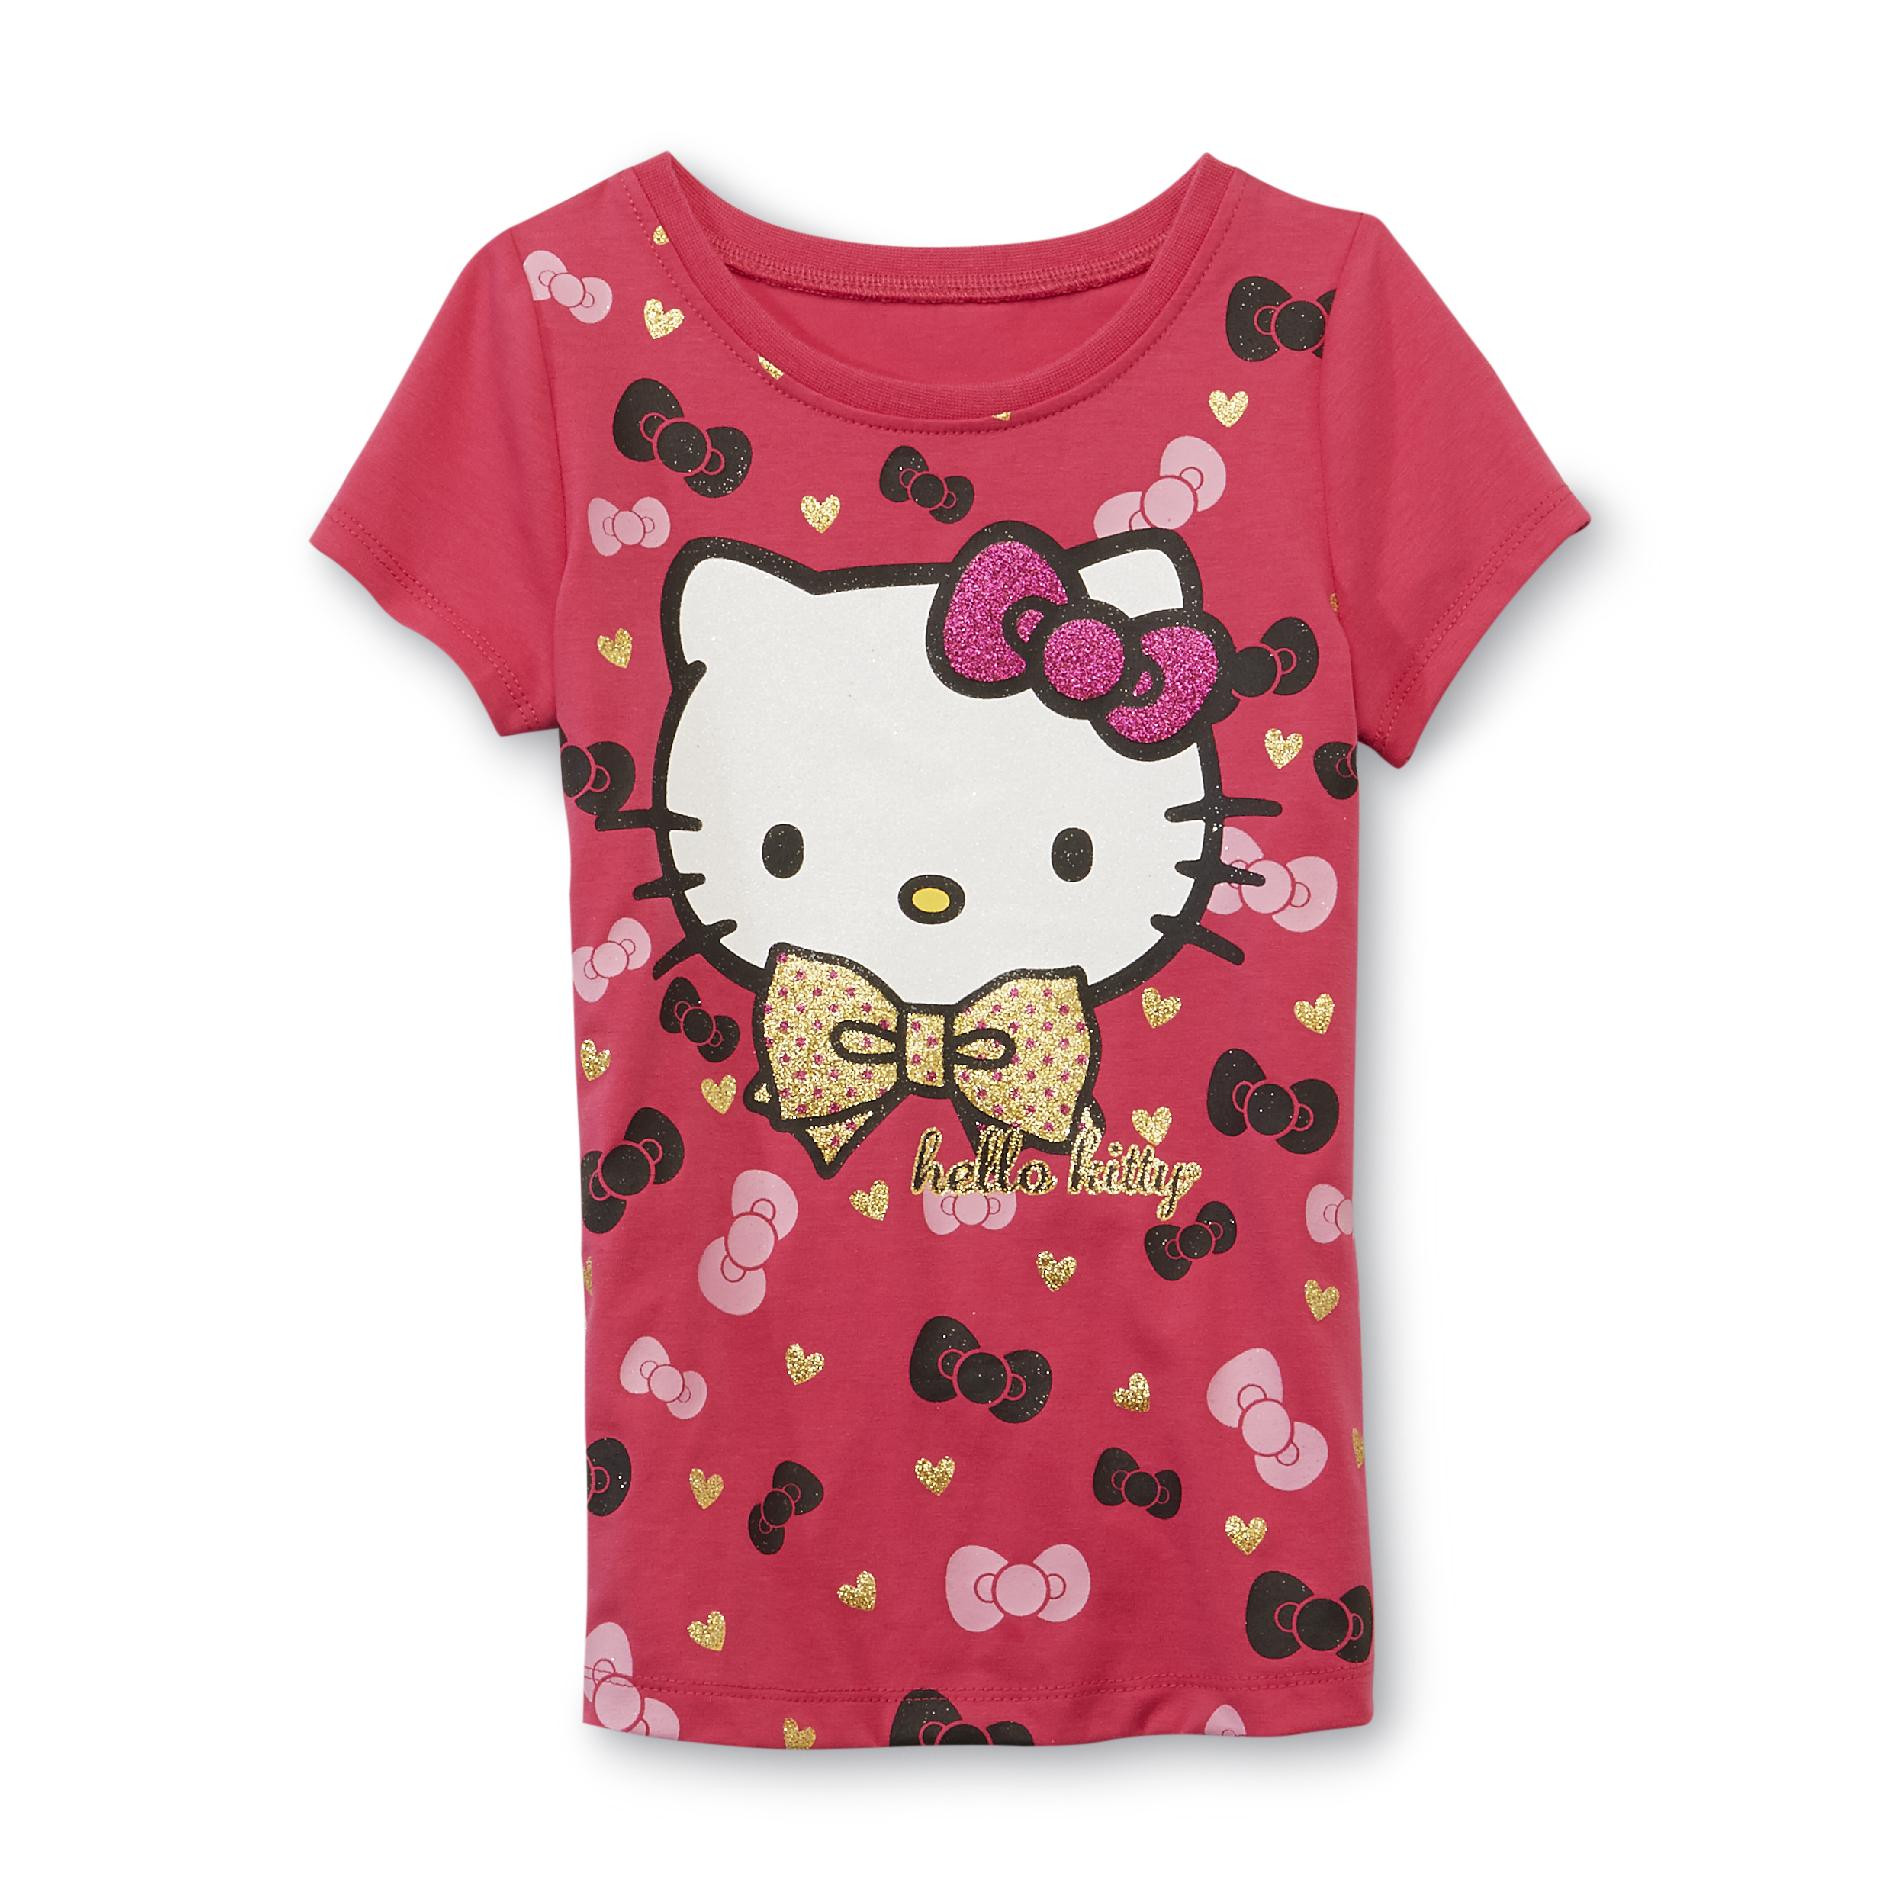 Hello Kitty Toddler Girl's Short-Sleeve Top - Bows